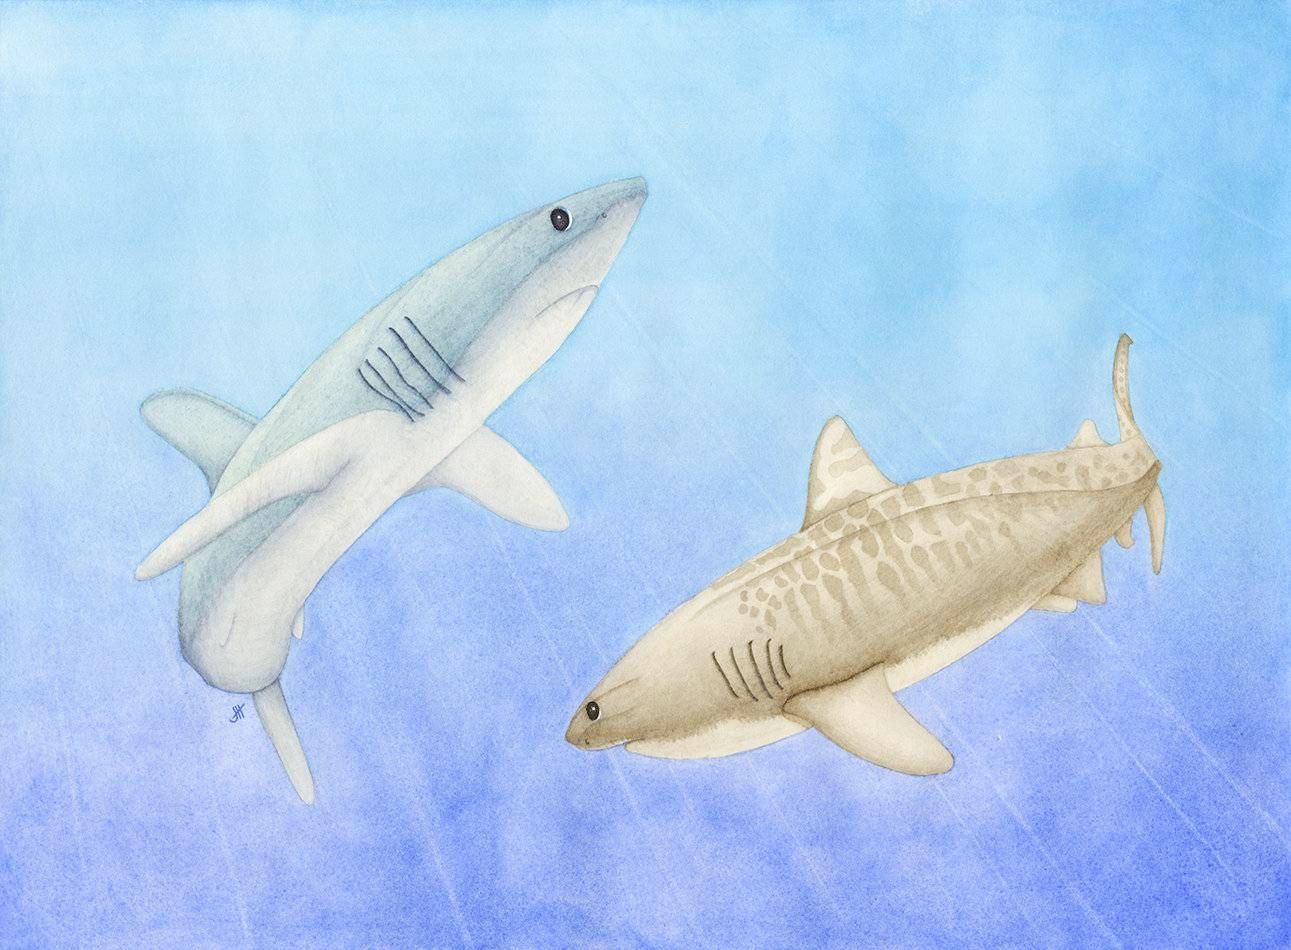 Sharks, Galeocerdo cuvier and Isurus paucus